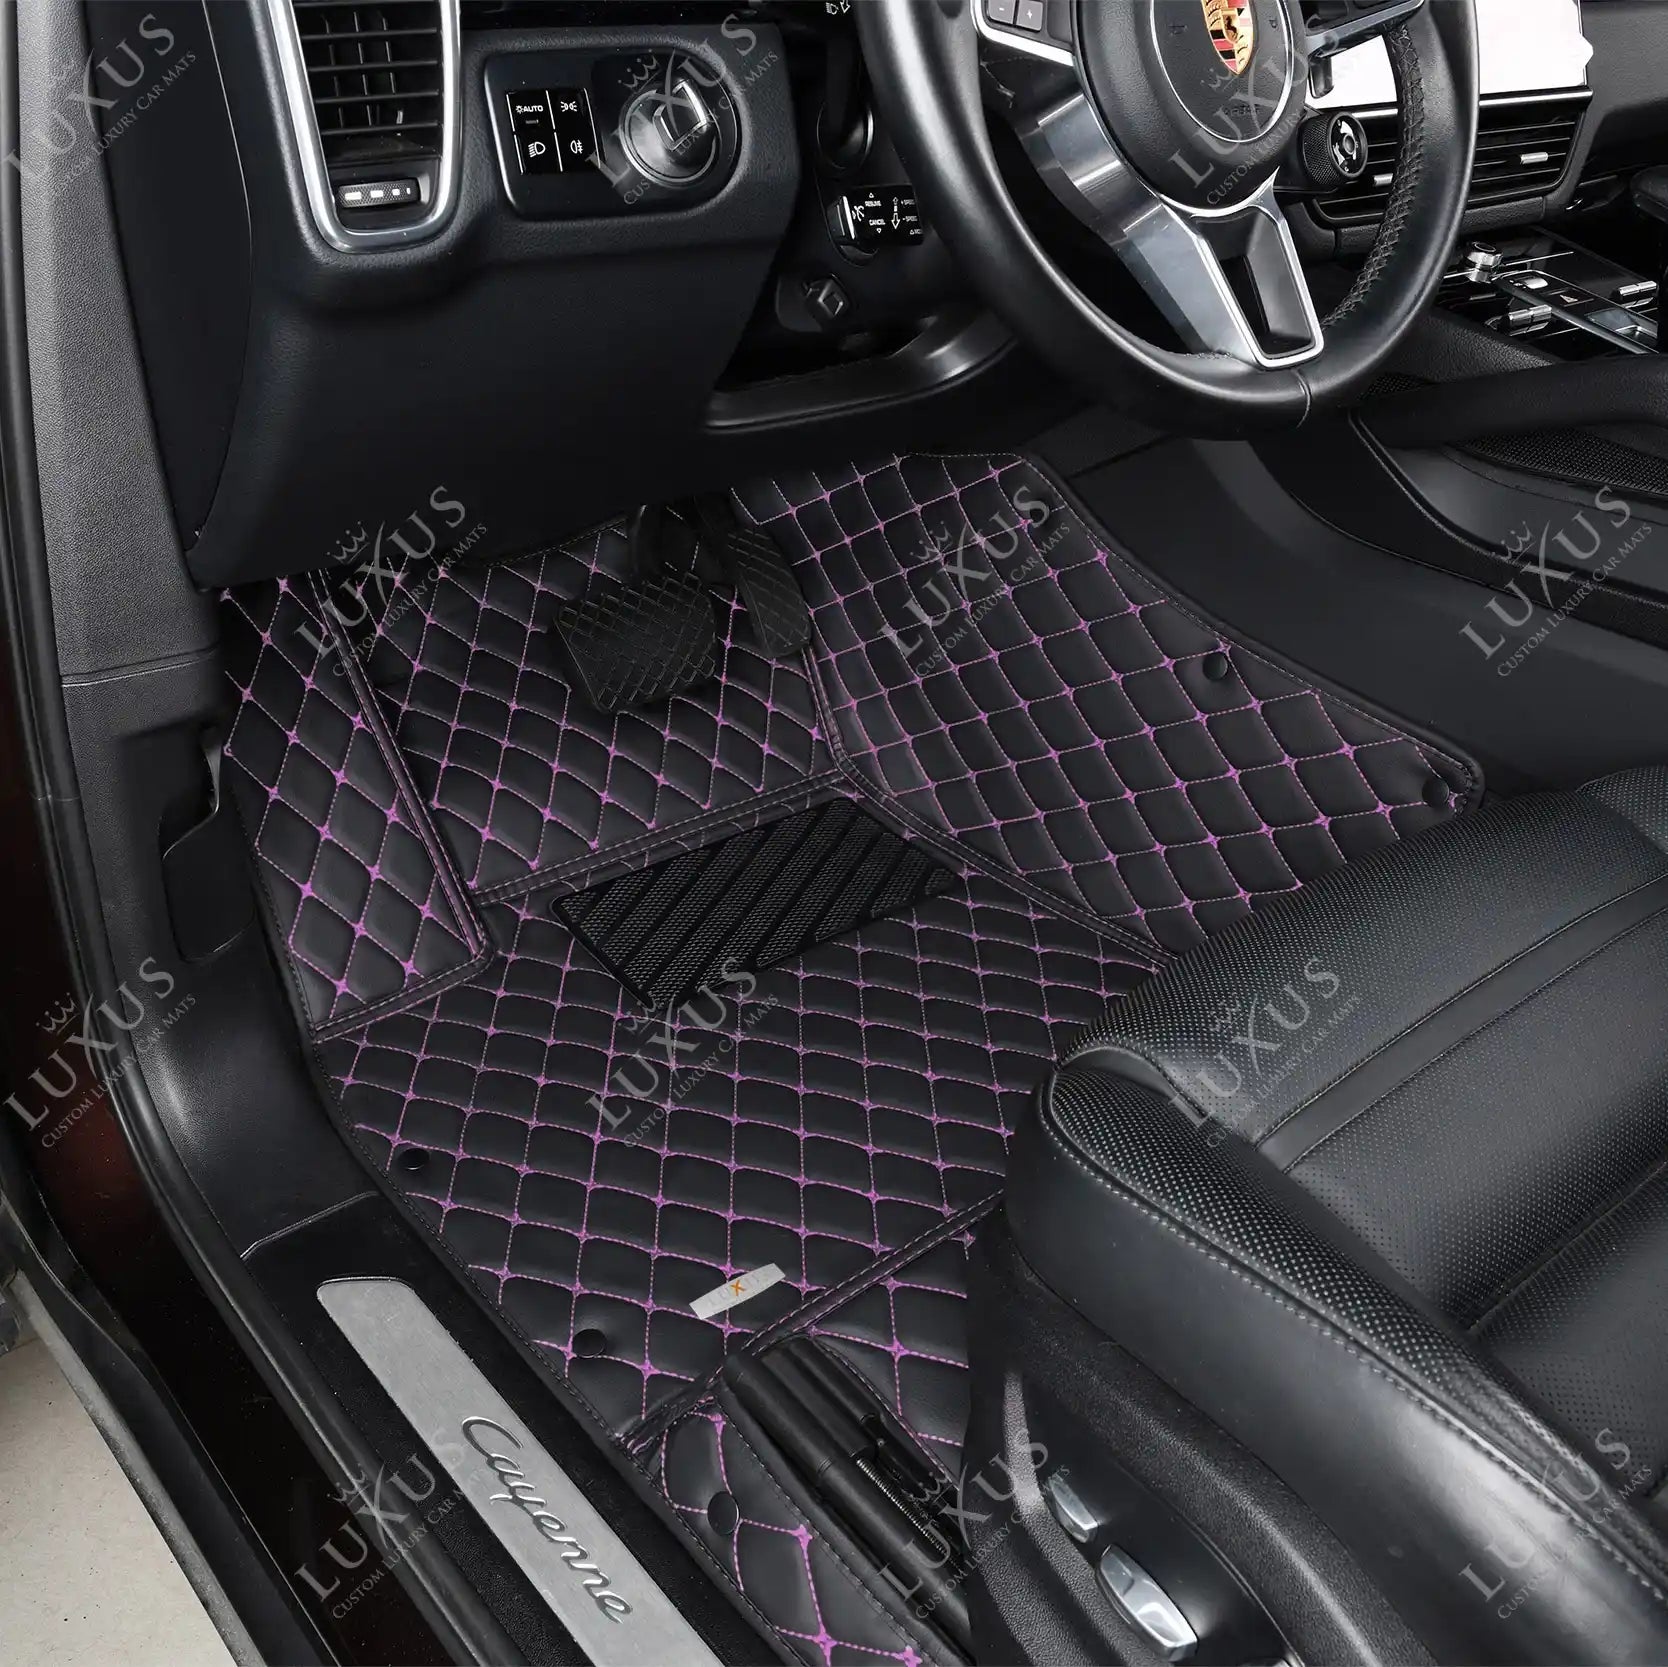 Black & Purple Stitching Diamond Luxury Car Mats Set